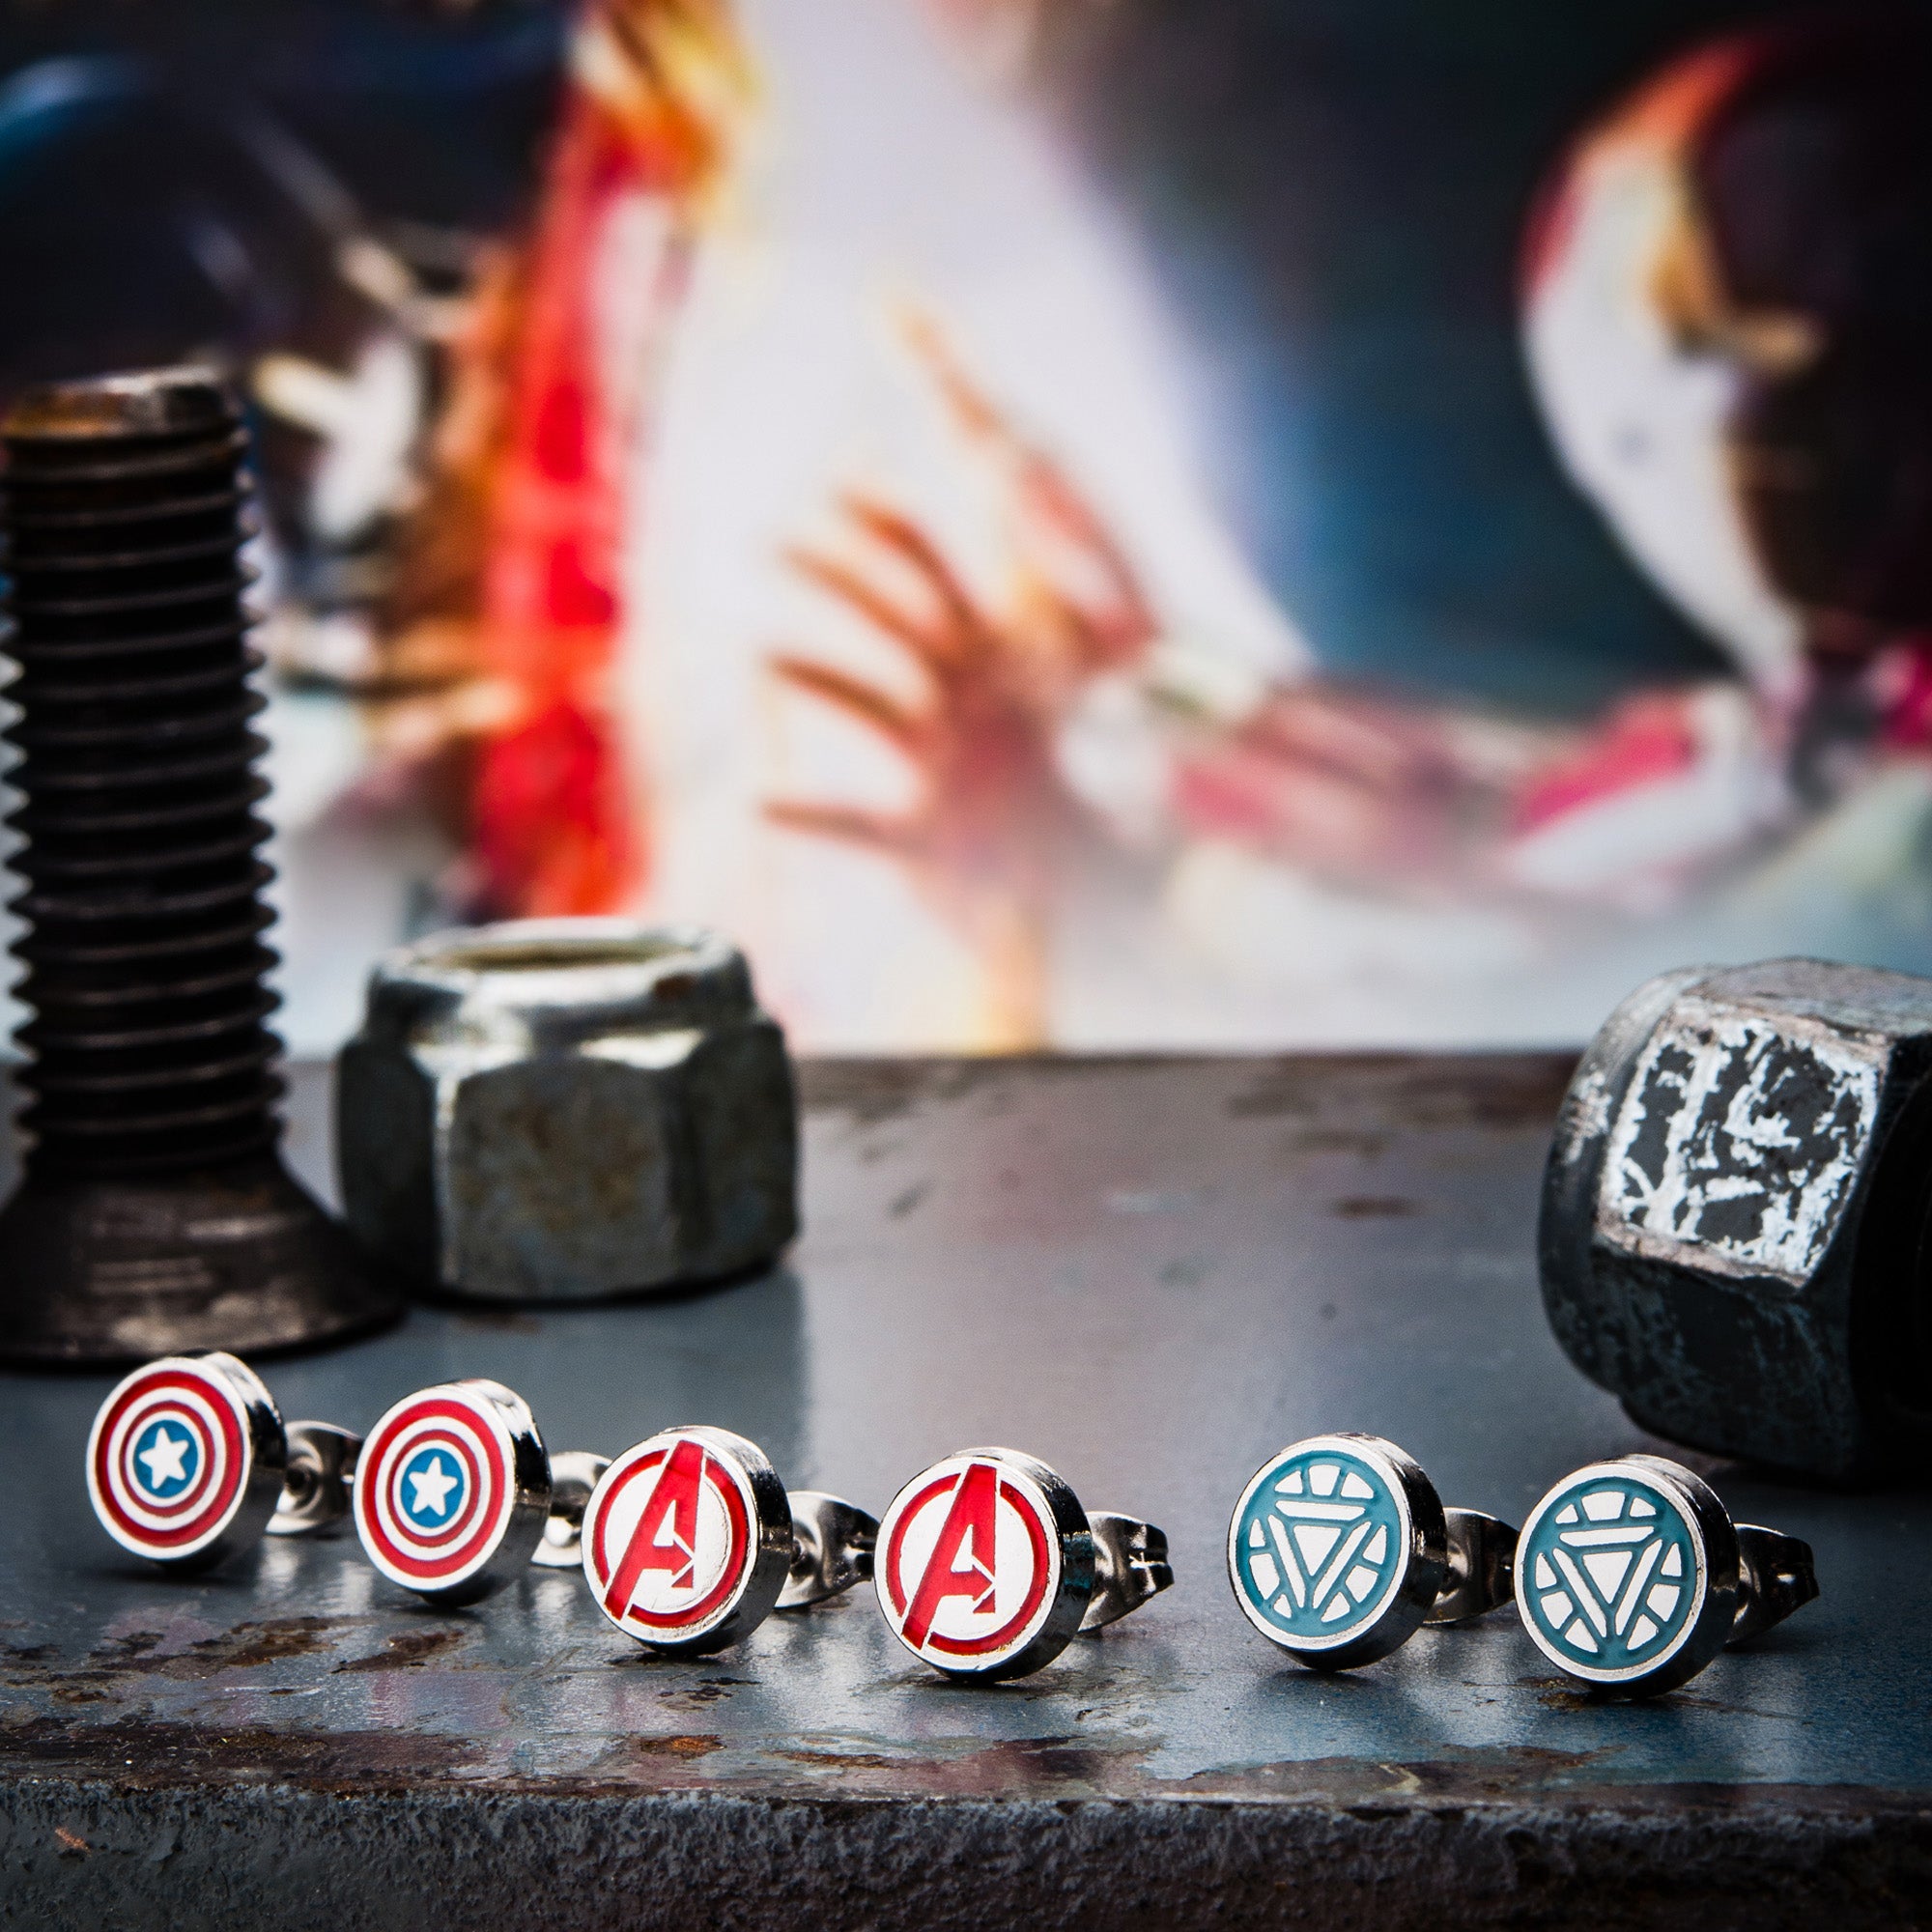 Marvel The Avenger "A" Logo,Captain America and Iron Man Stud Logos Earrings Set